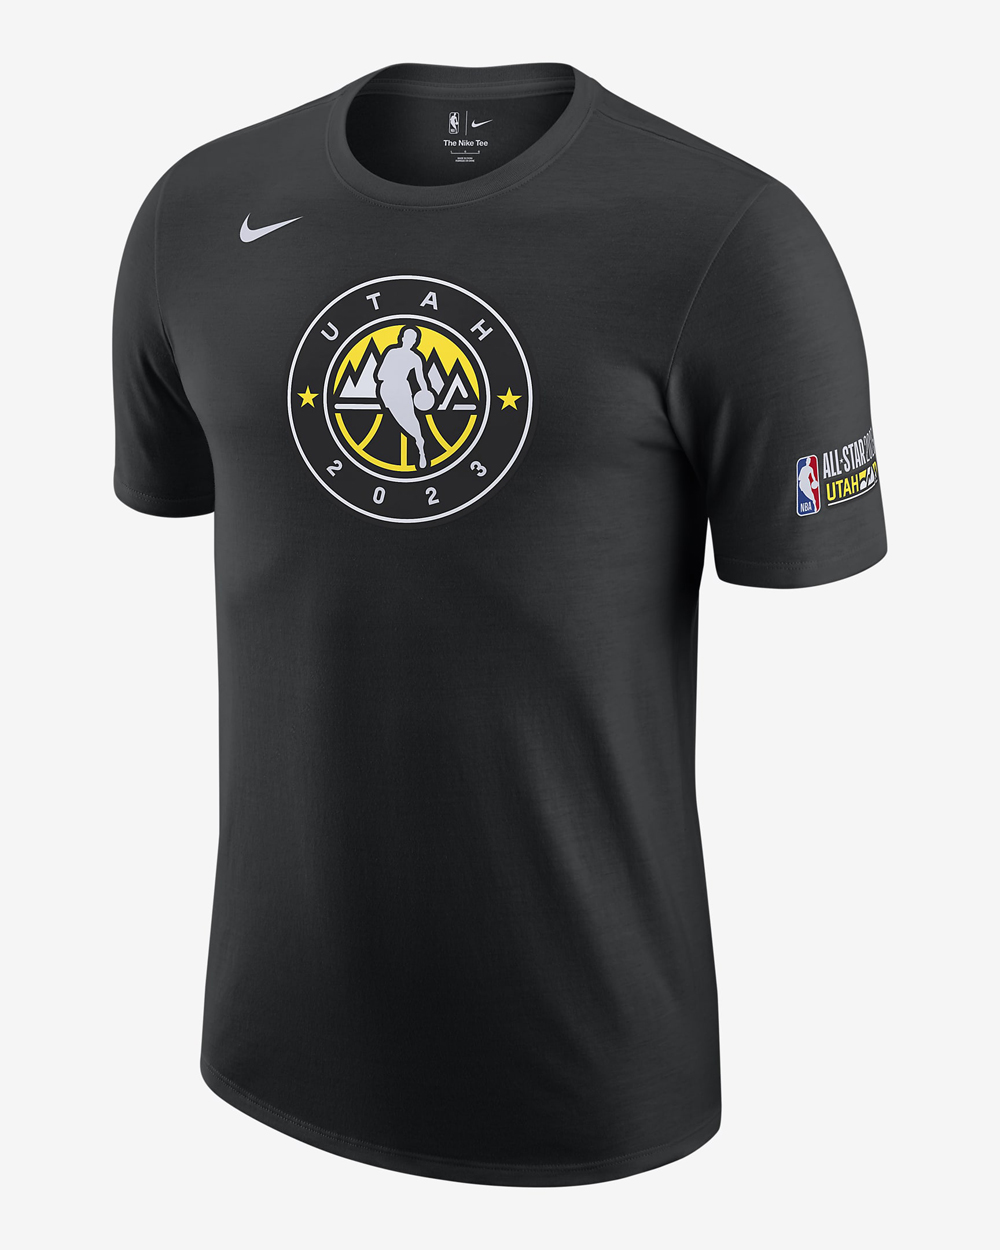 Nike-NBA-All-Star-Game-2023-T-Shirt-Black